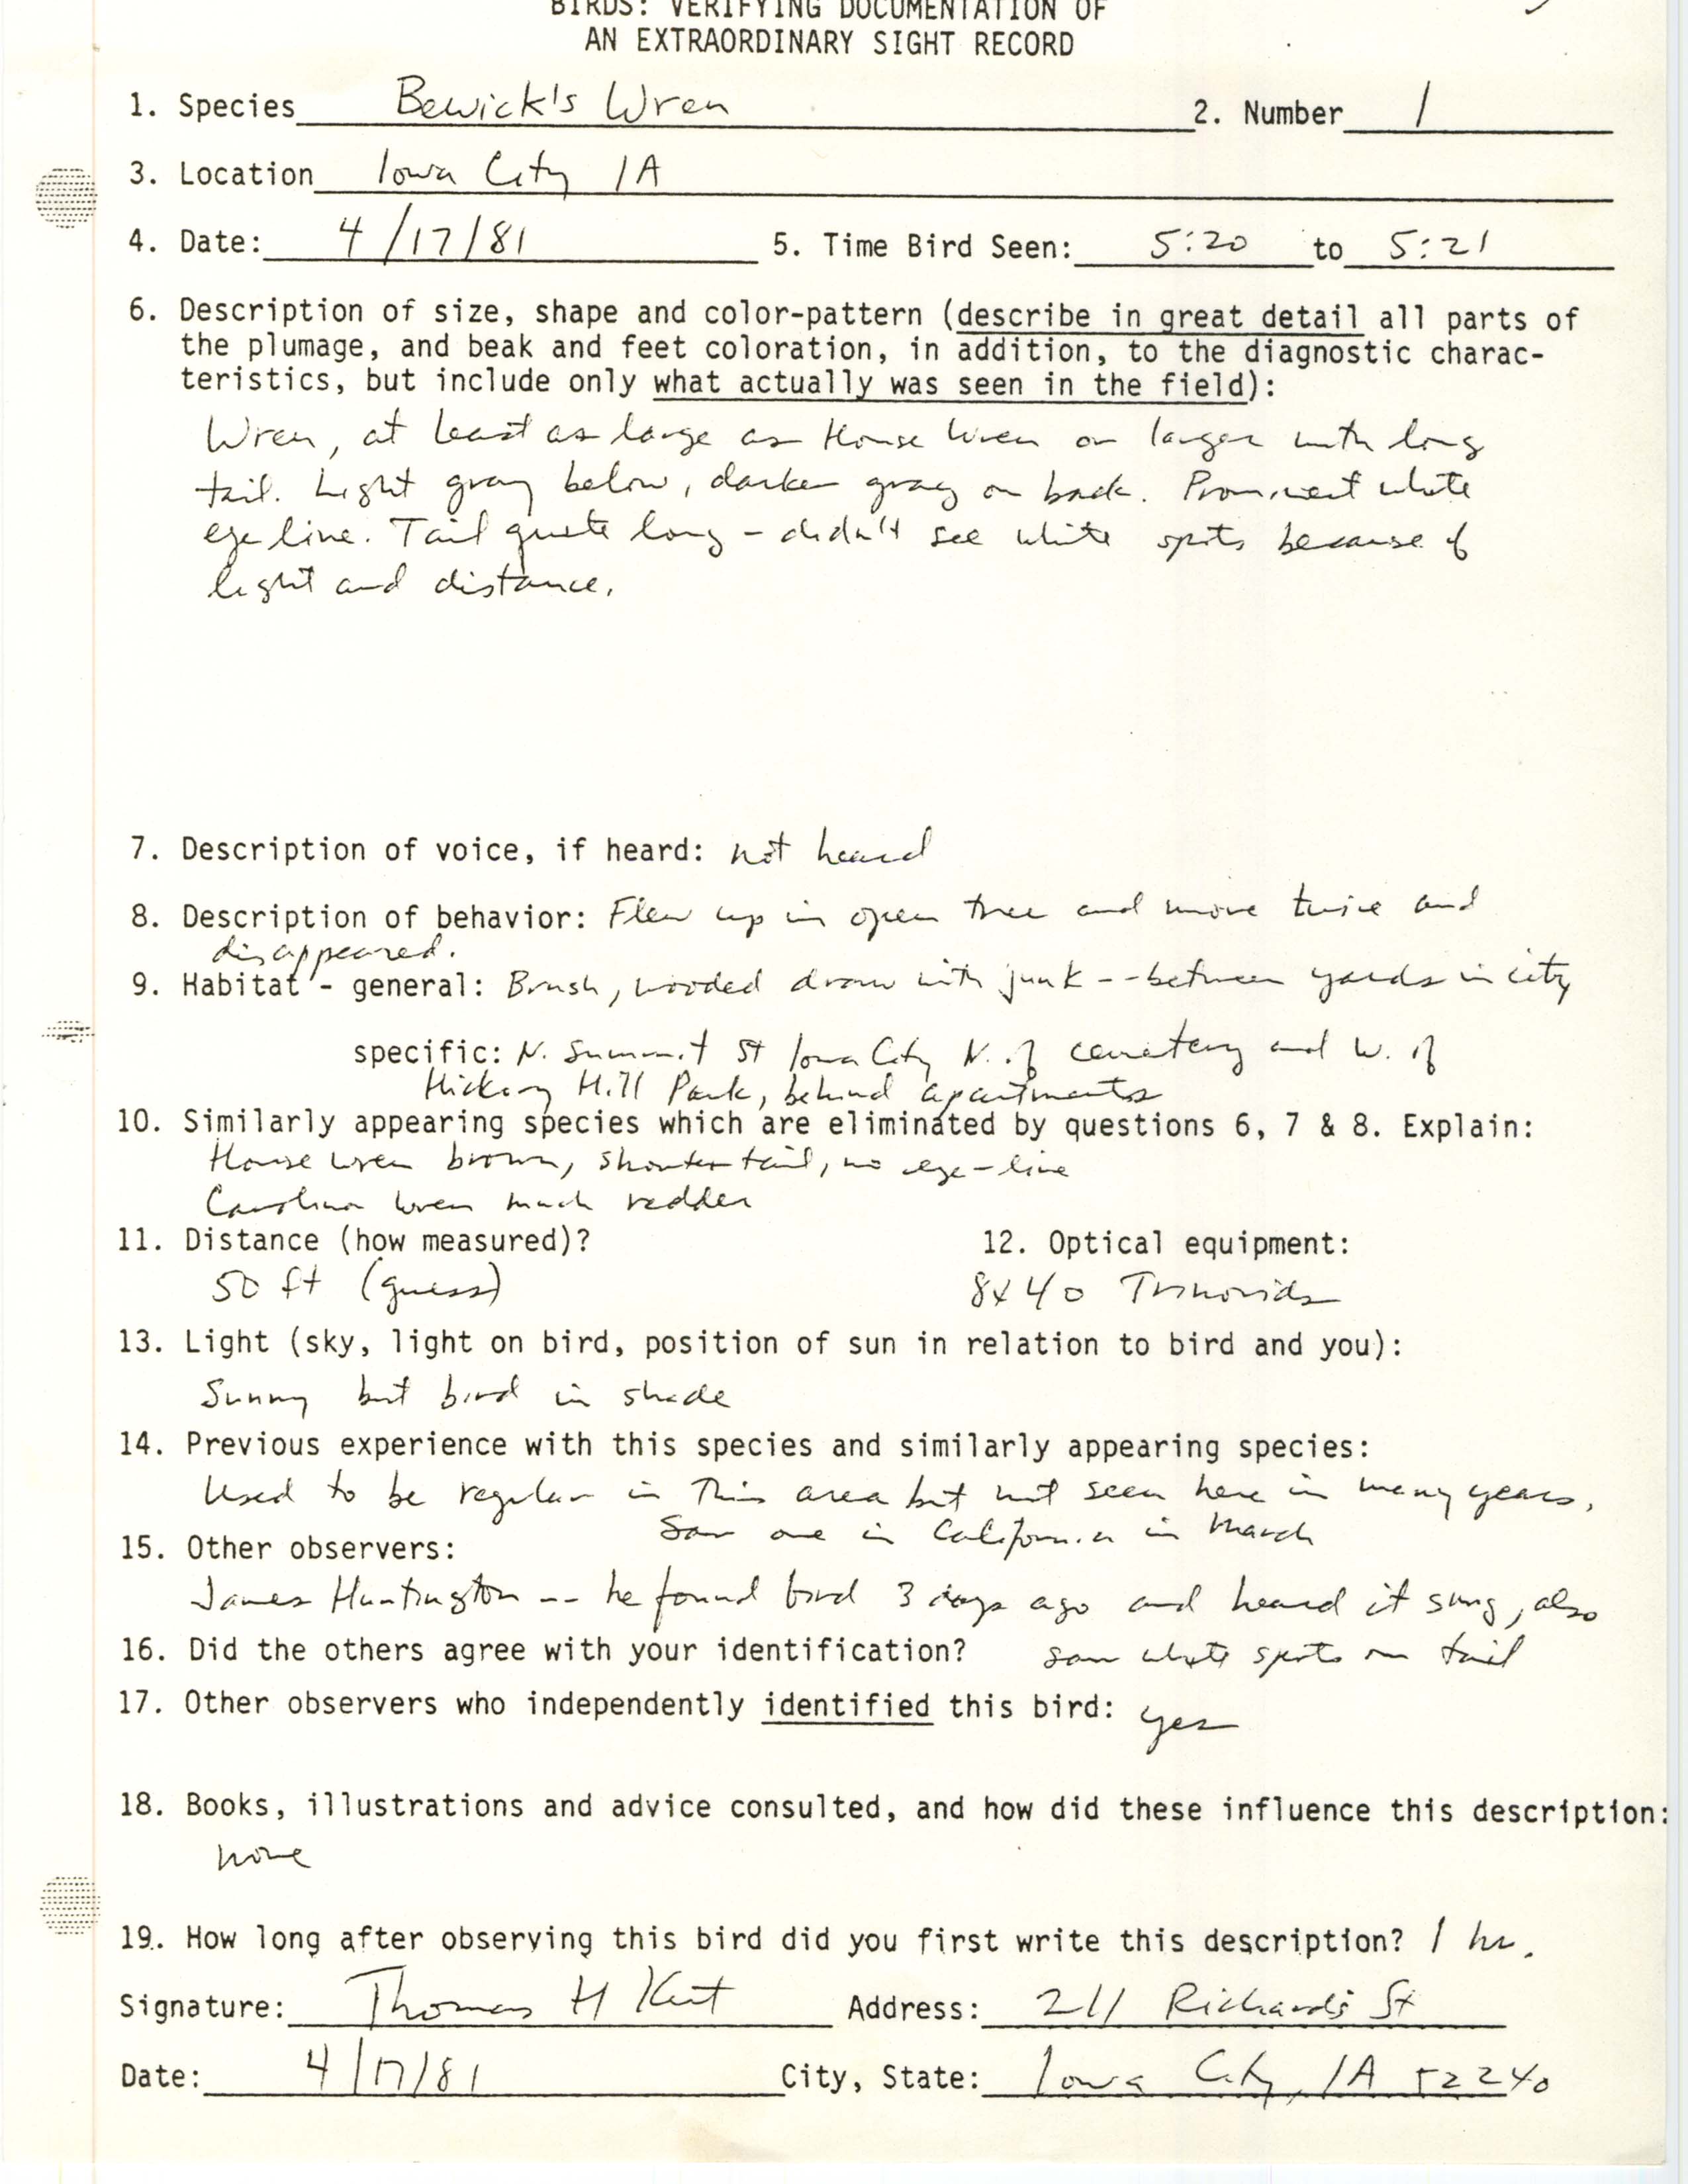 Rare bird documentation form for Bewick's Wren at Iowa City, 1981